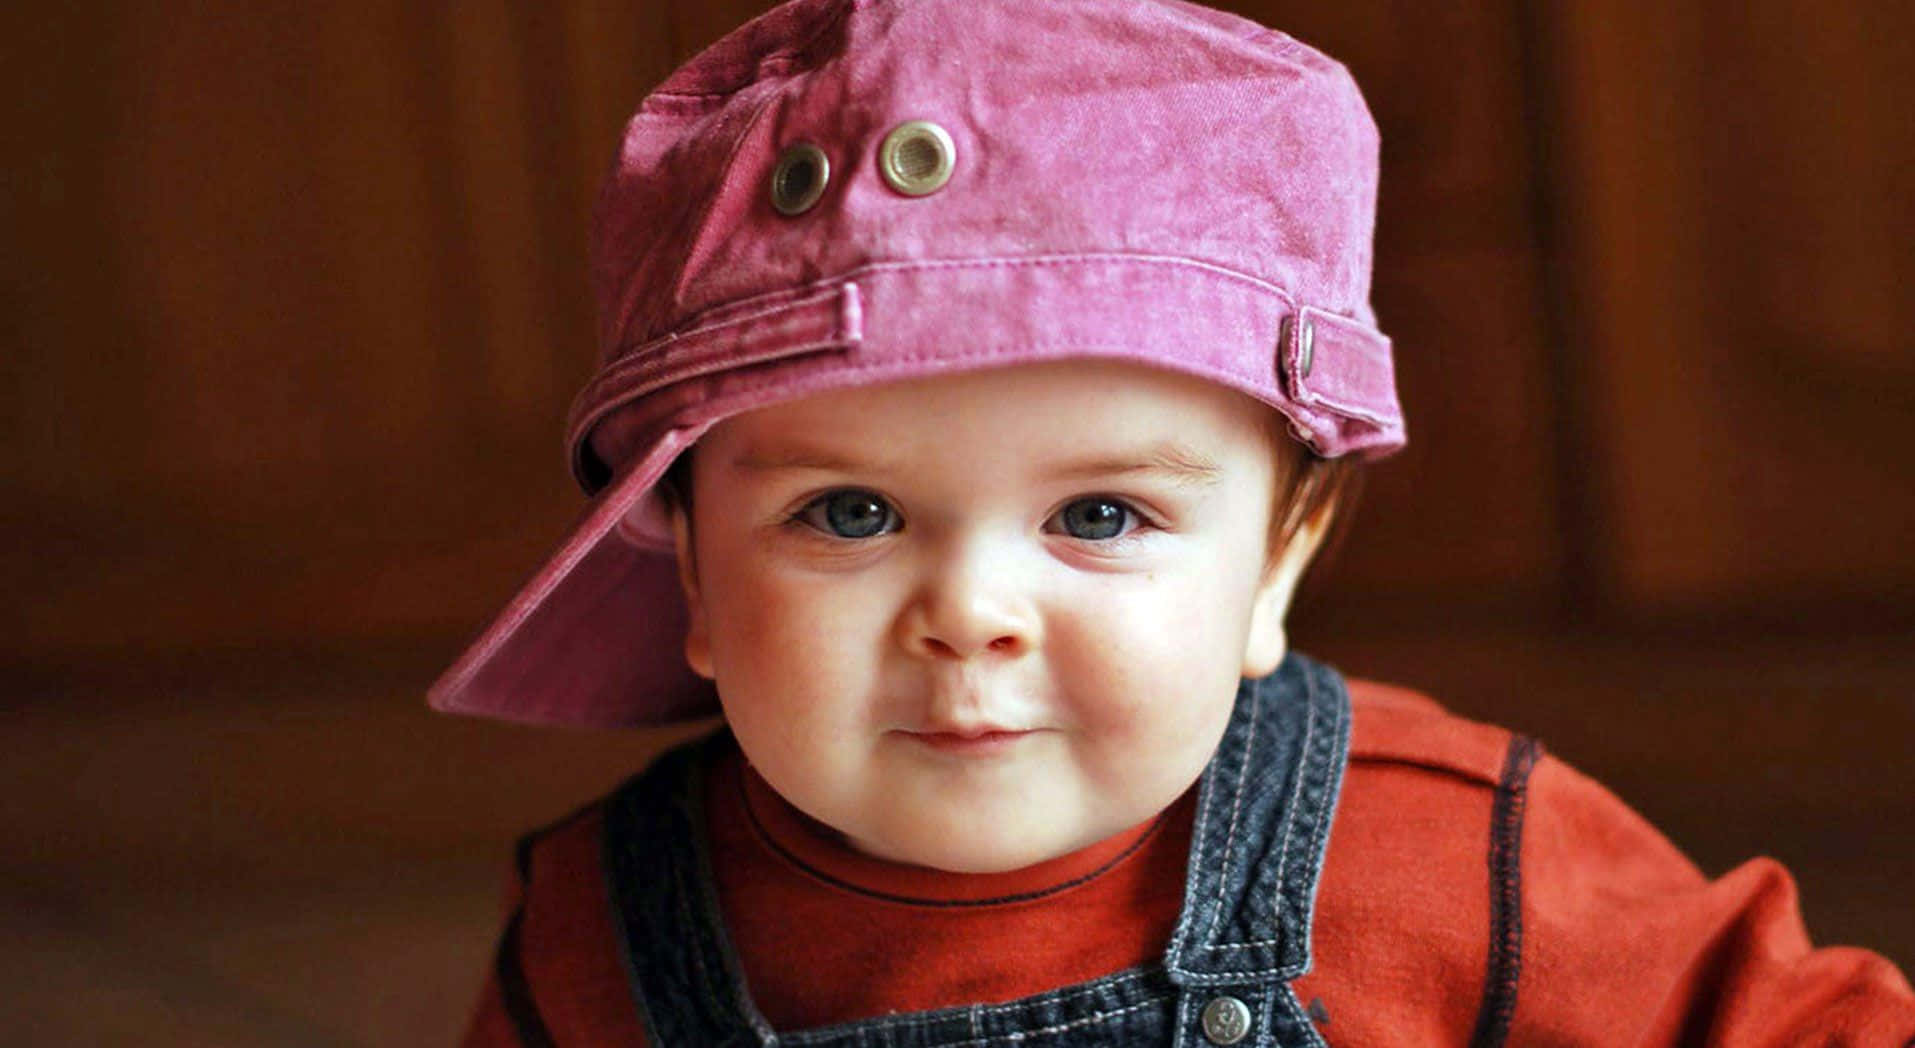 Cute Baby Wearing A Cap Wallpaper